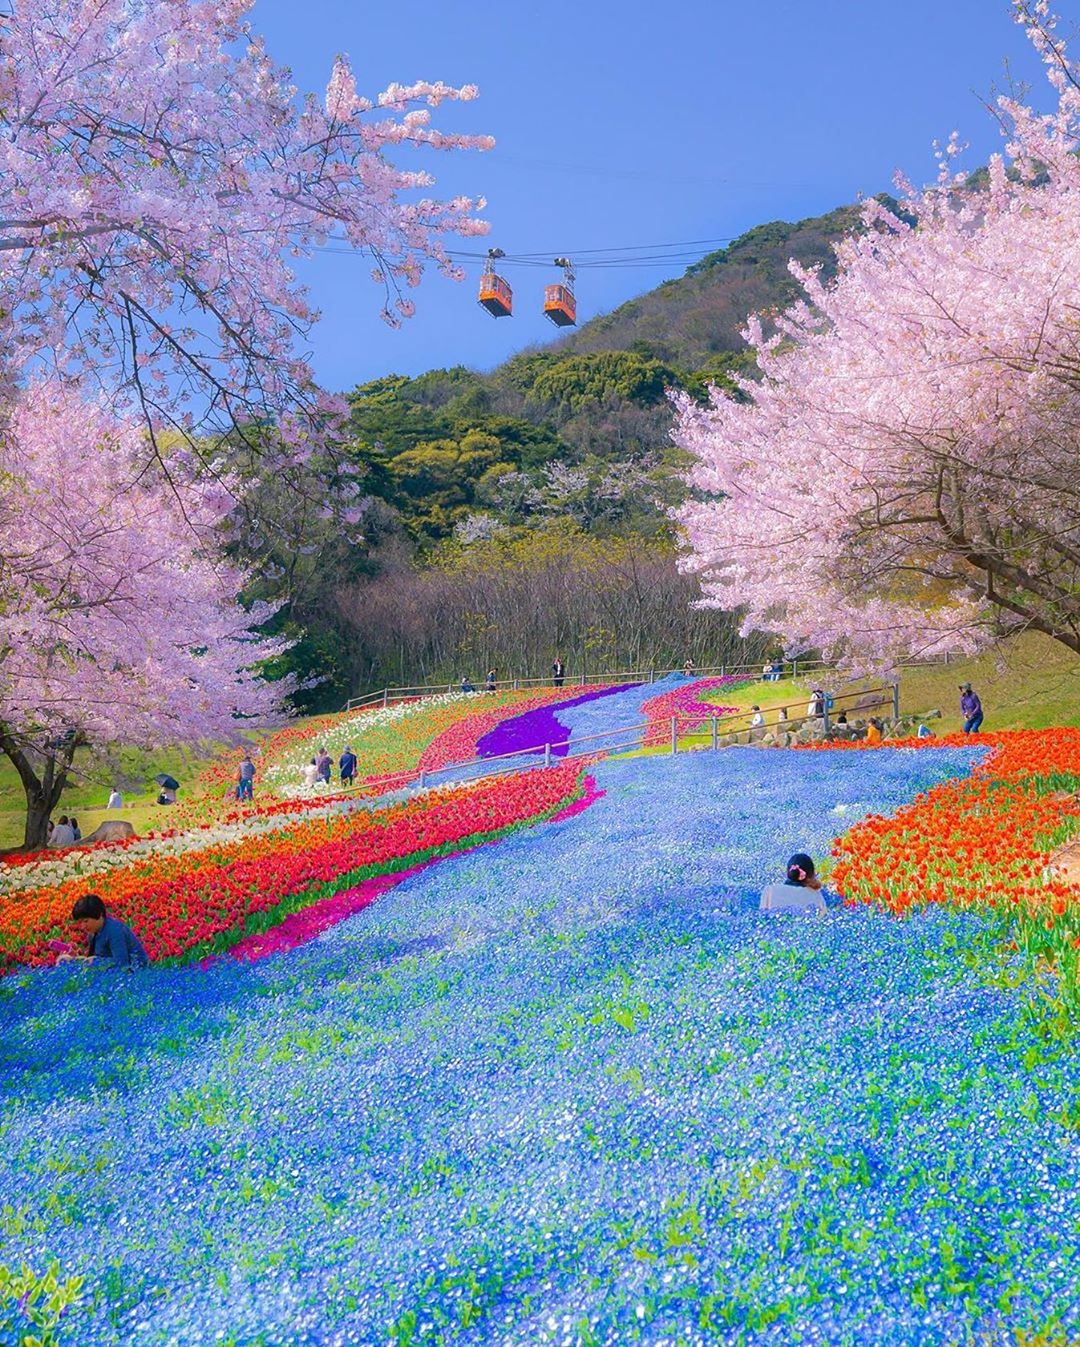 Retrip News Retrip 山口 山口県下関市の 火の山公園 は桜やチューリップの名所です 春は同時期にさまざまな品種の花が咲き乱れるため 園内には彩り豊かな風景が広がっ Wacoca Japan People Life Style